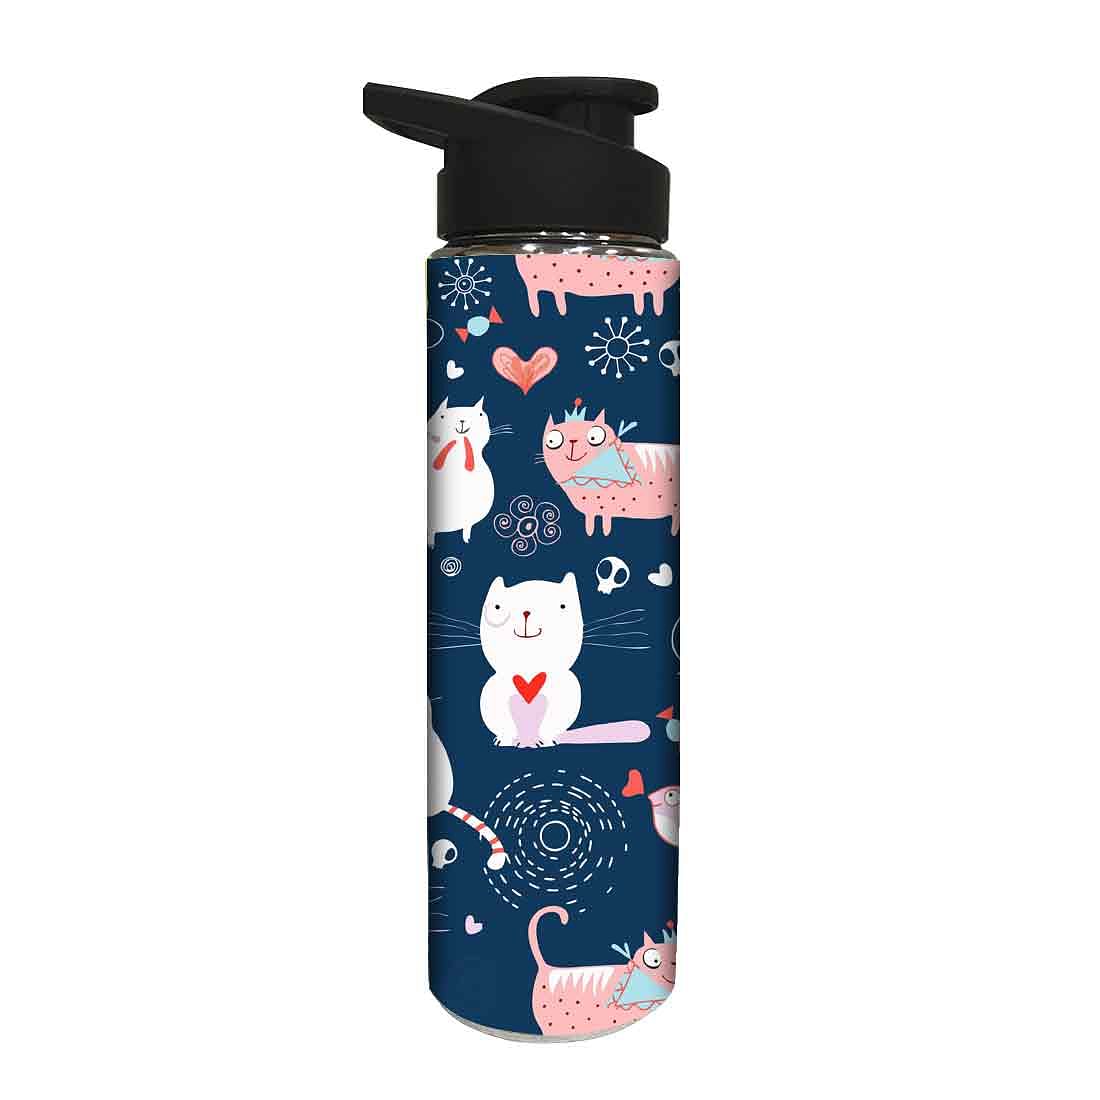 Designer Stainless Steel Water Bottle for Girls - Cute Cats Nutcase